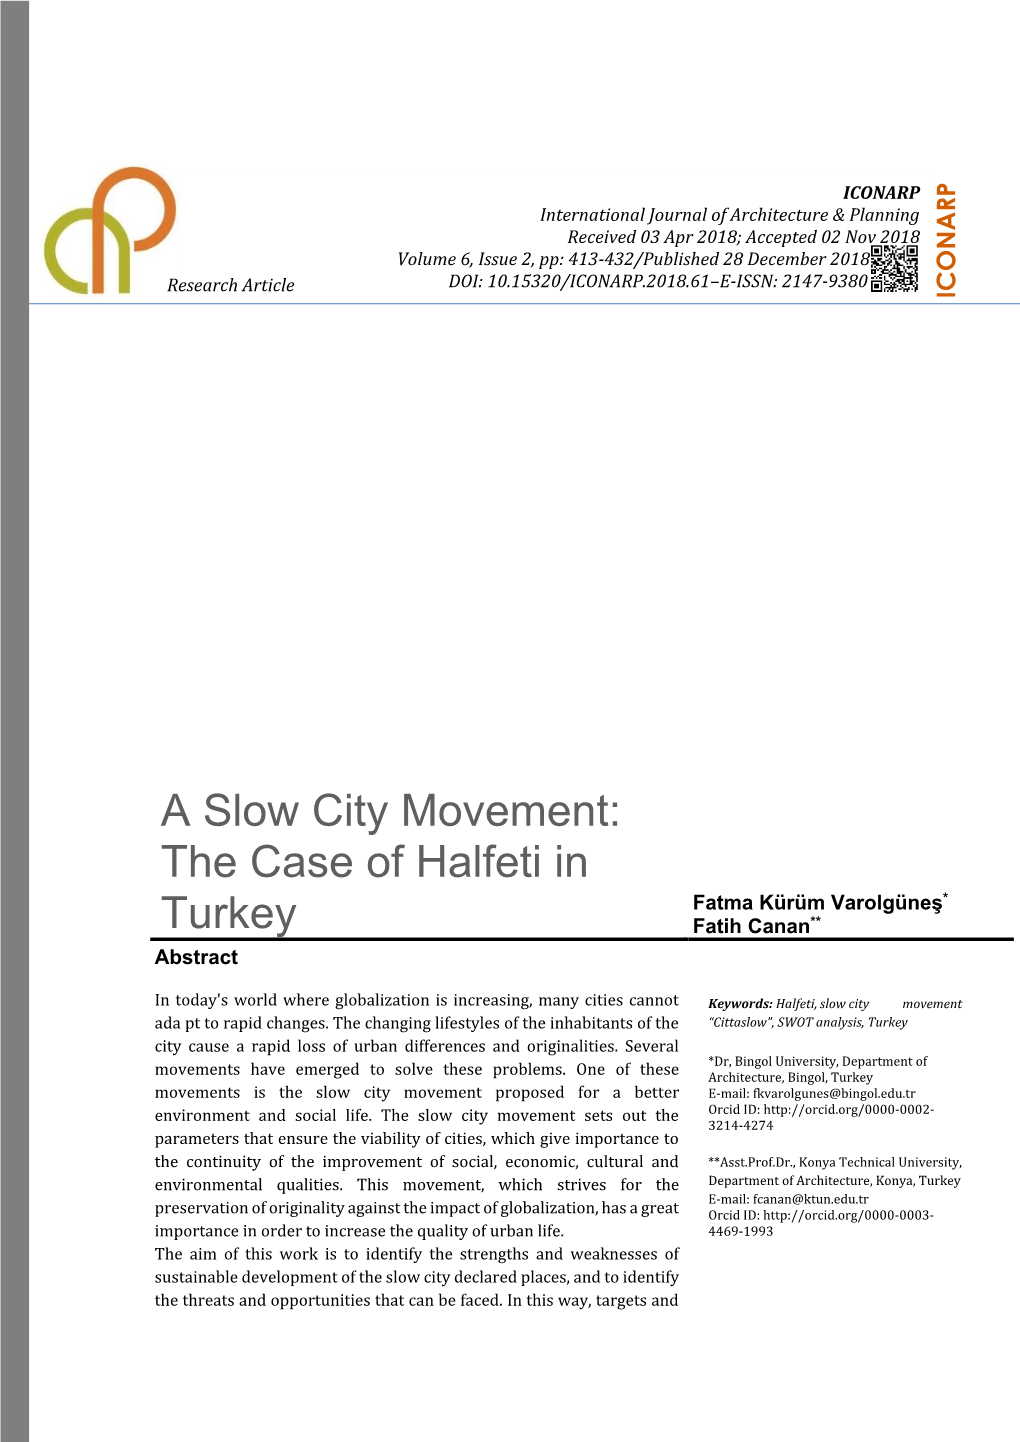 A Slow City Movement: the Case of Halfeti in Turkey